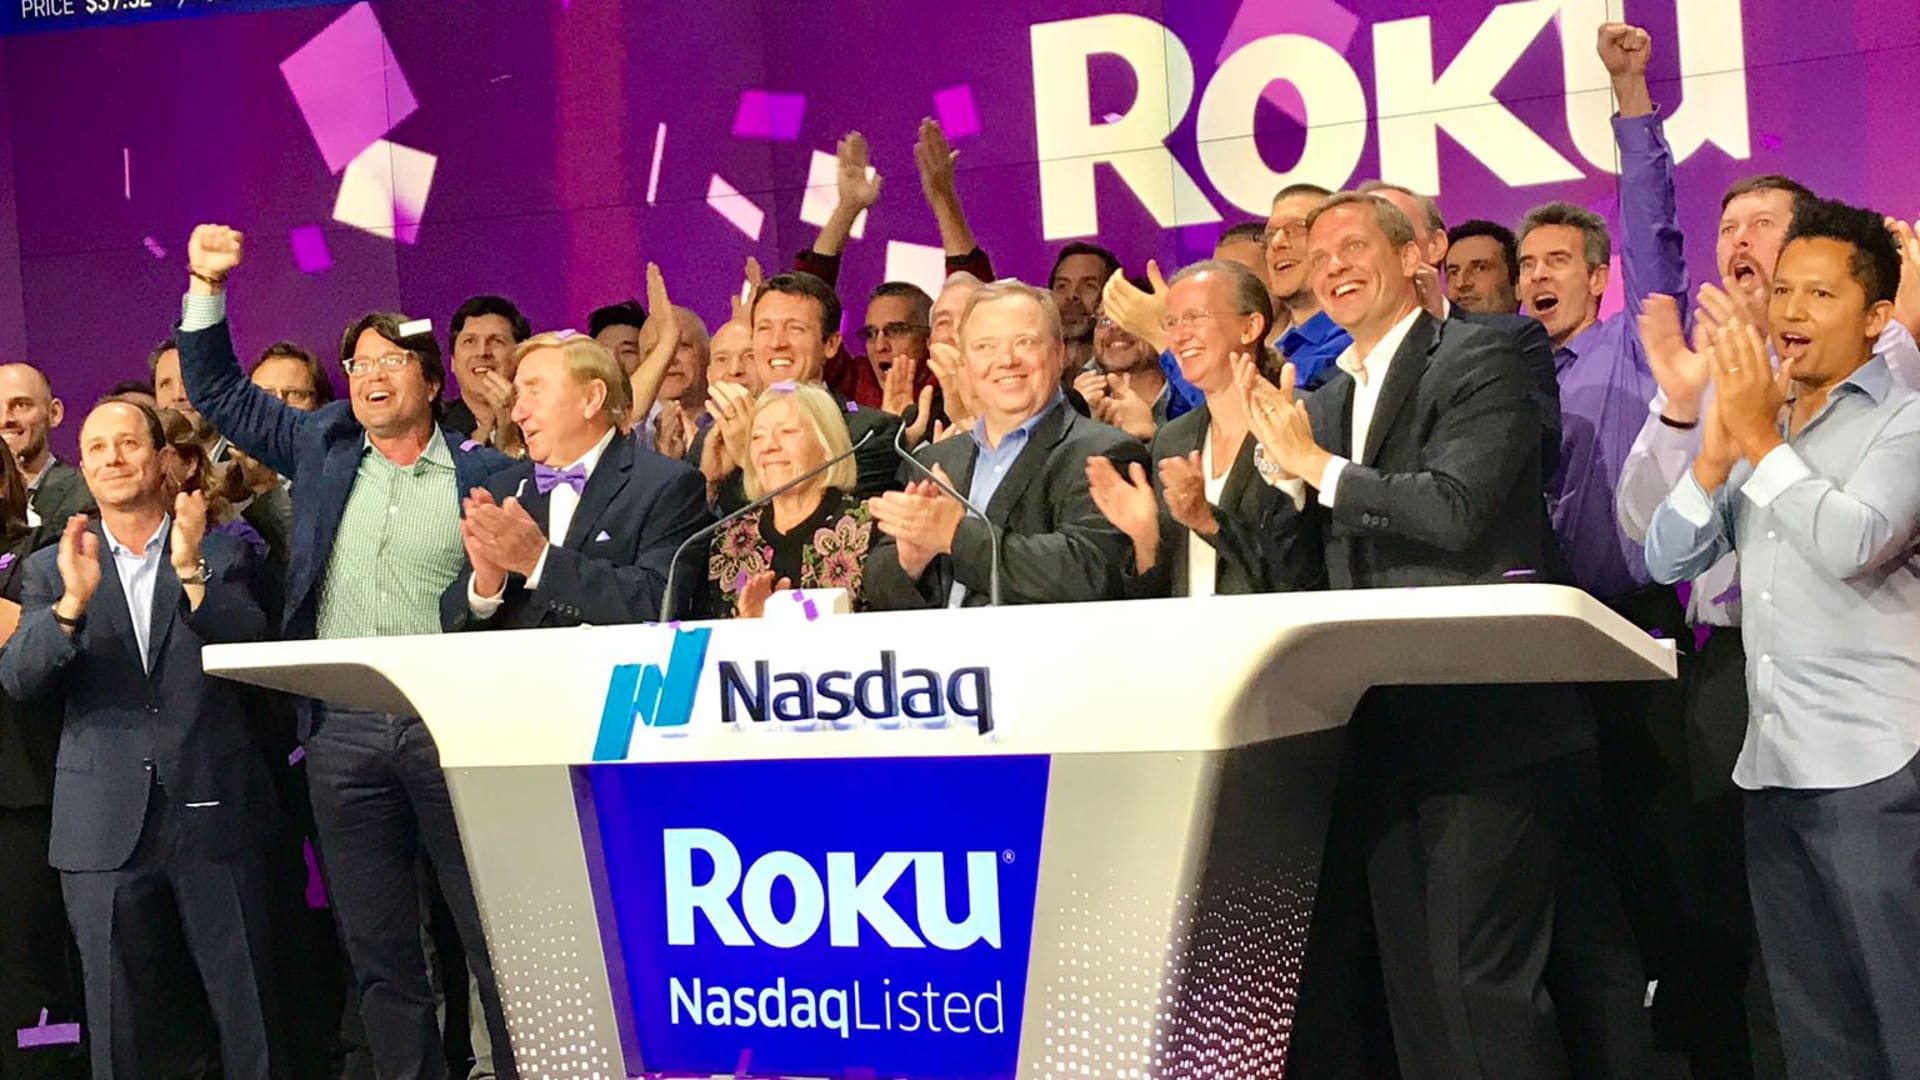 The Roku IPO at the Nasdaq, September 28, 2017.